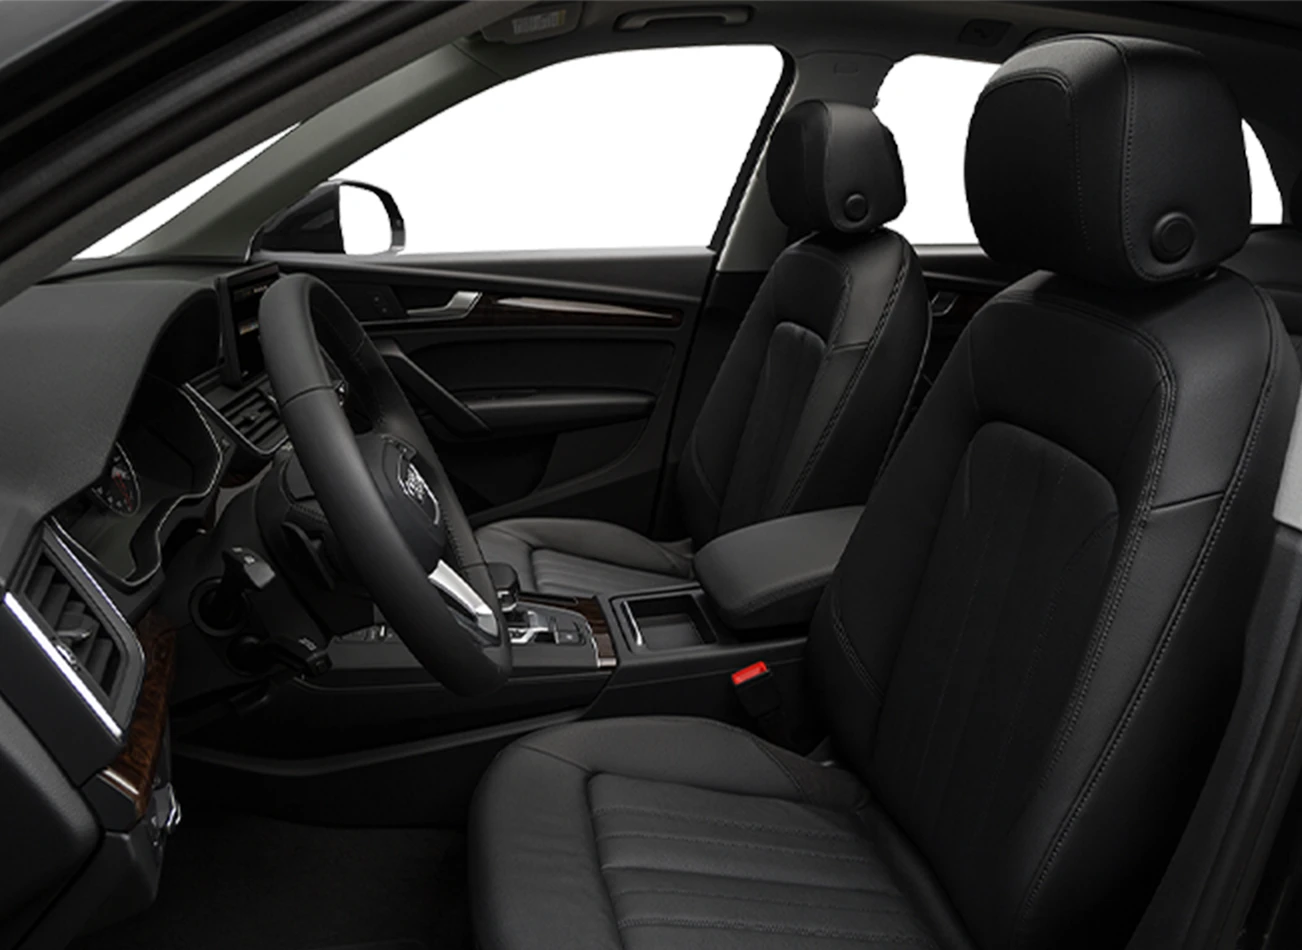 2019 Audi Q5 Review: Reviews, Photos, and More: Reasons to Buy #4 | CarMax